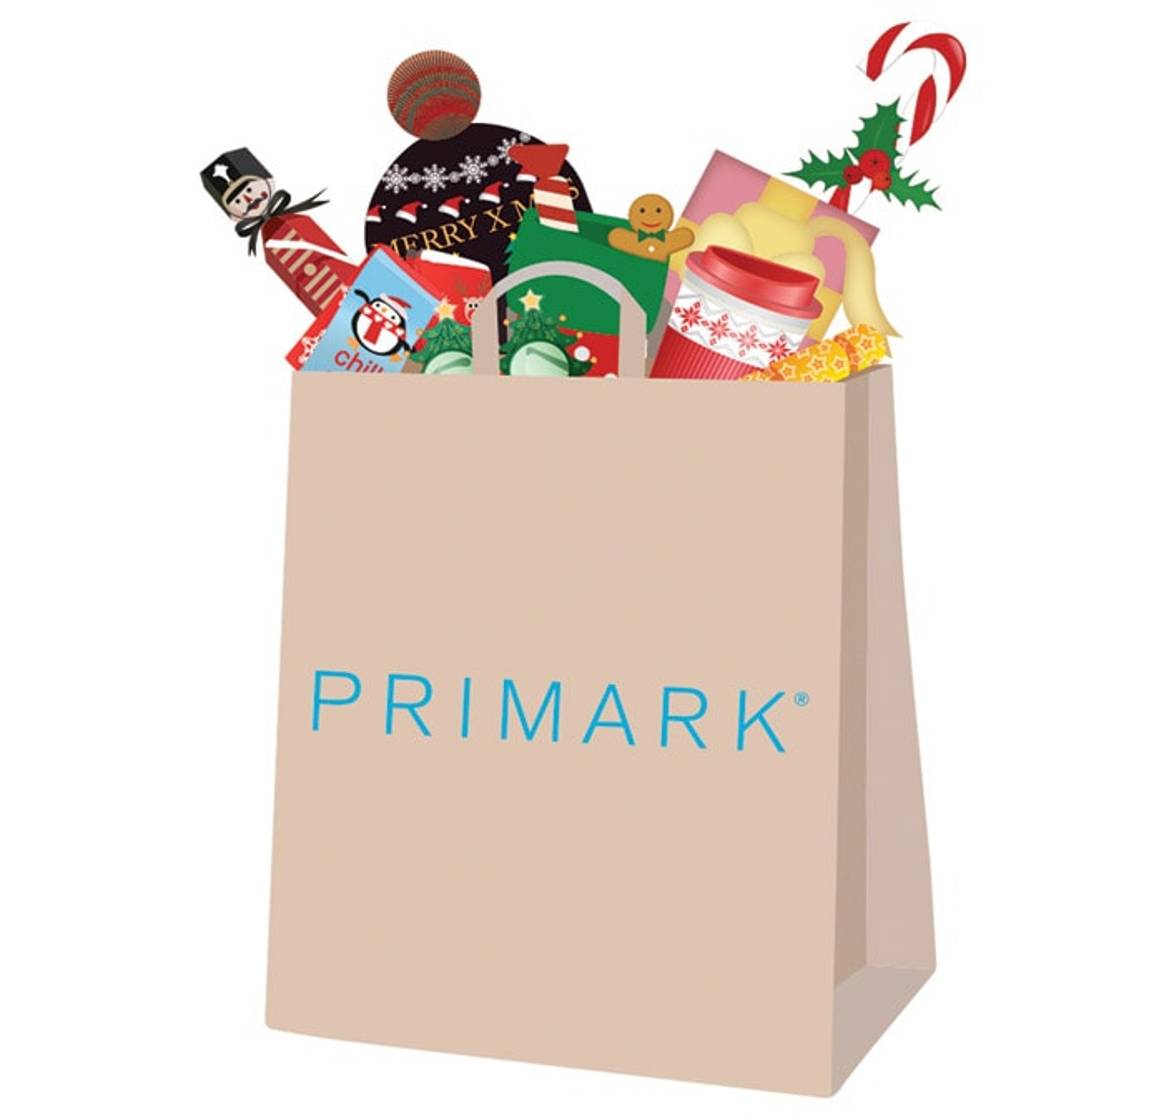 Primark launches festive emoji app